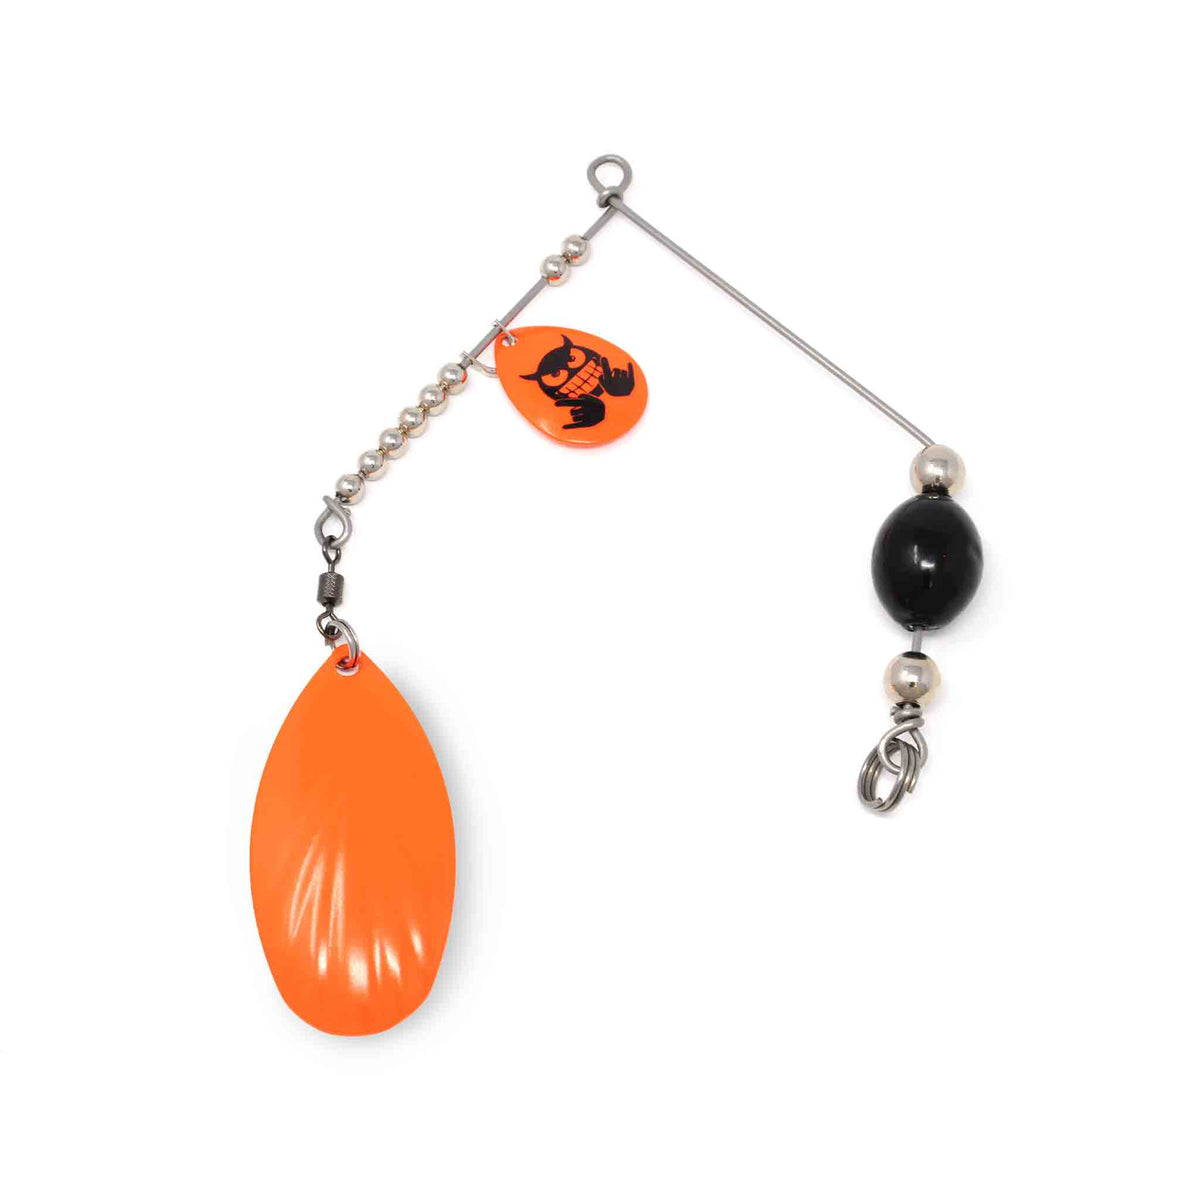 Mad Chasse Fluted Blade Spinner Bait Attachment 1.5oz / #F8 Orange / Orange Nickel Lures Add-on